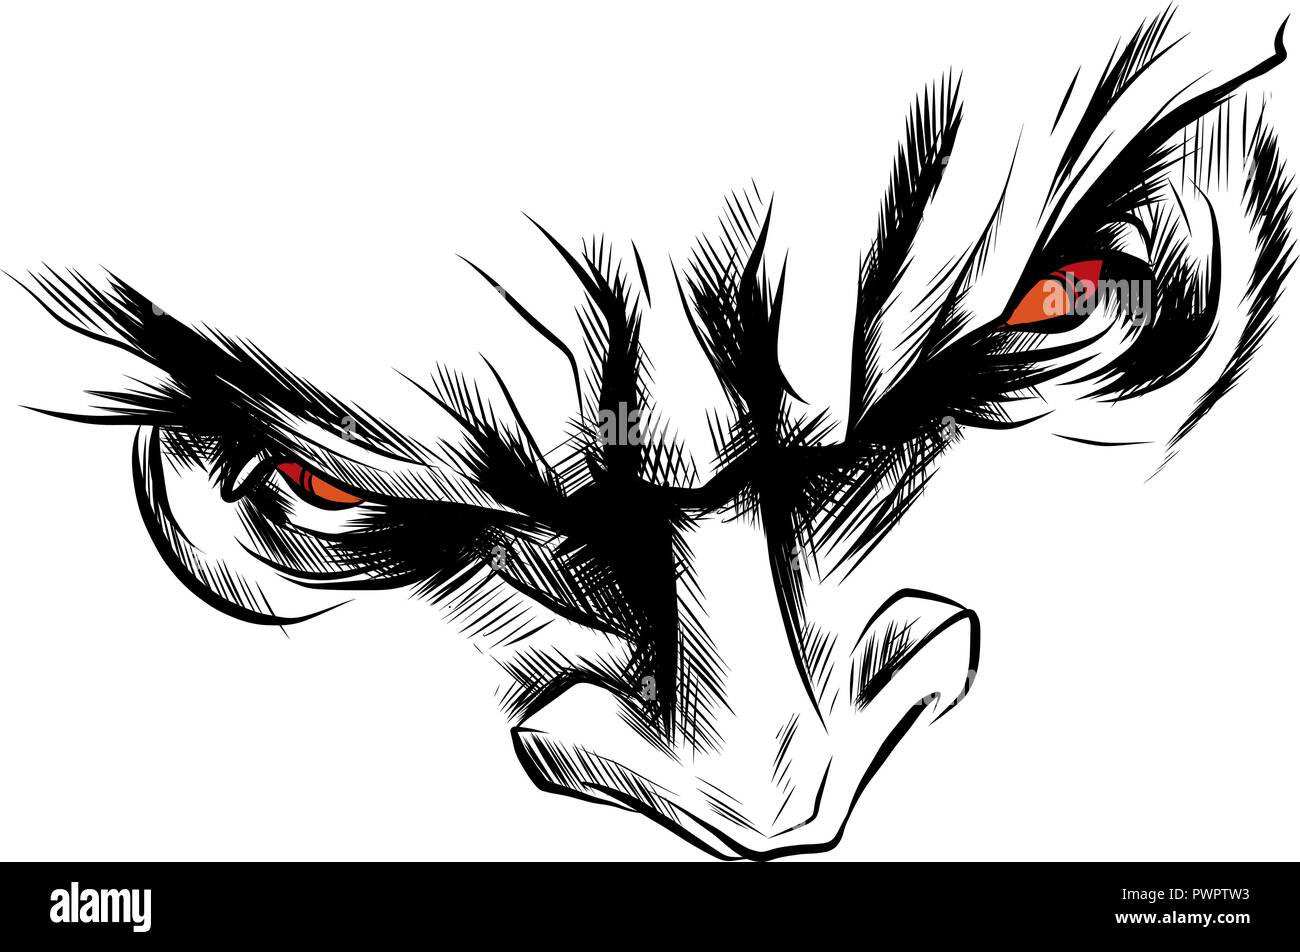 Angry Anime Face Manga Style Big Blue Eyes Stock Vector  Illustration of  dangerous cartoon 178755793